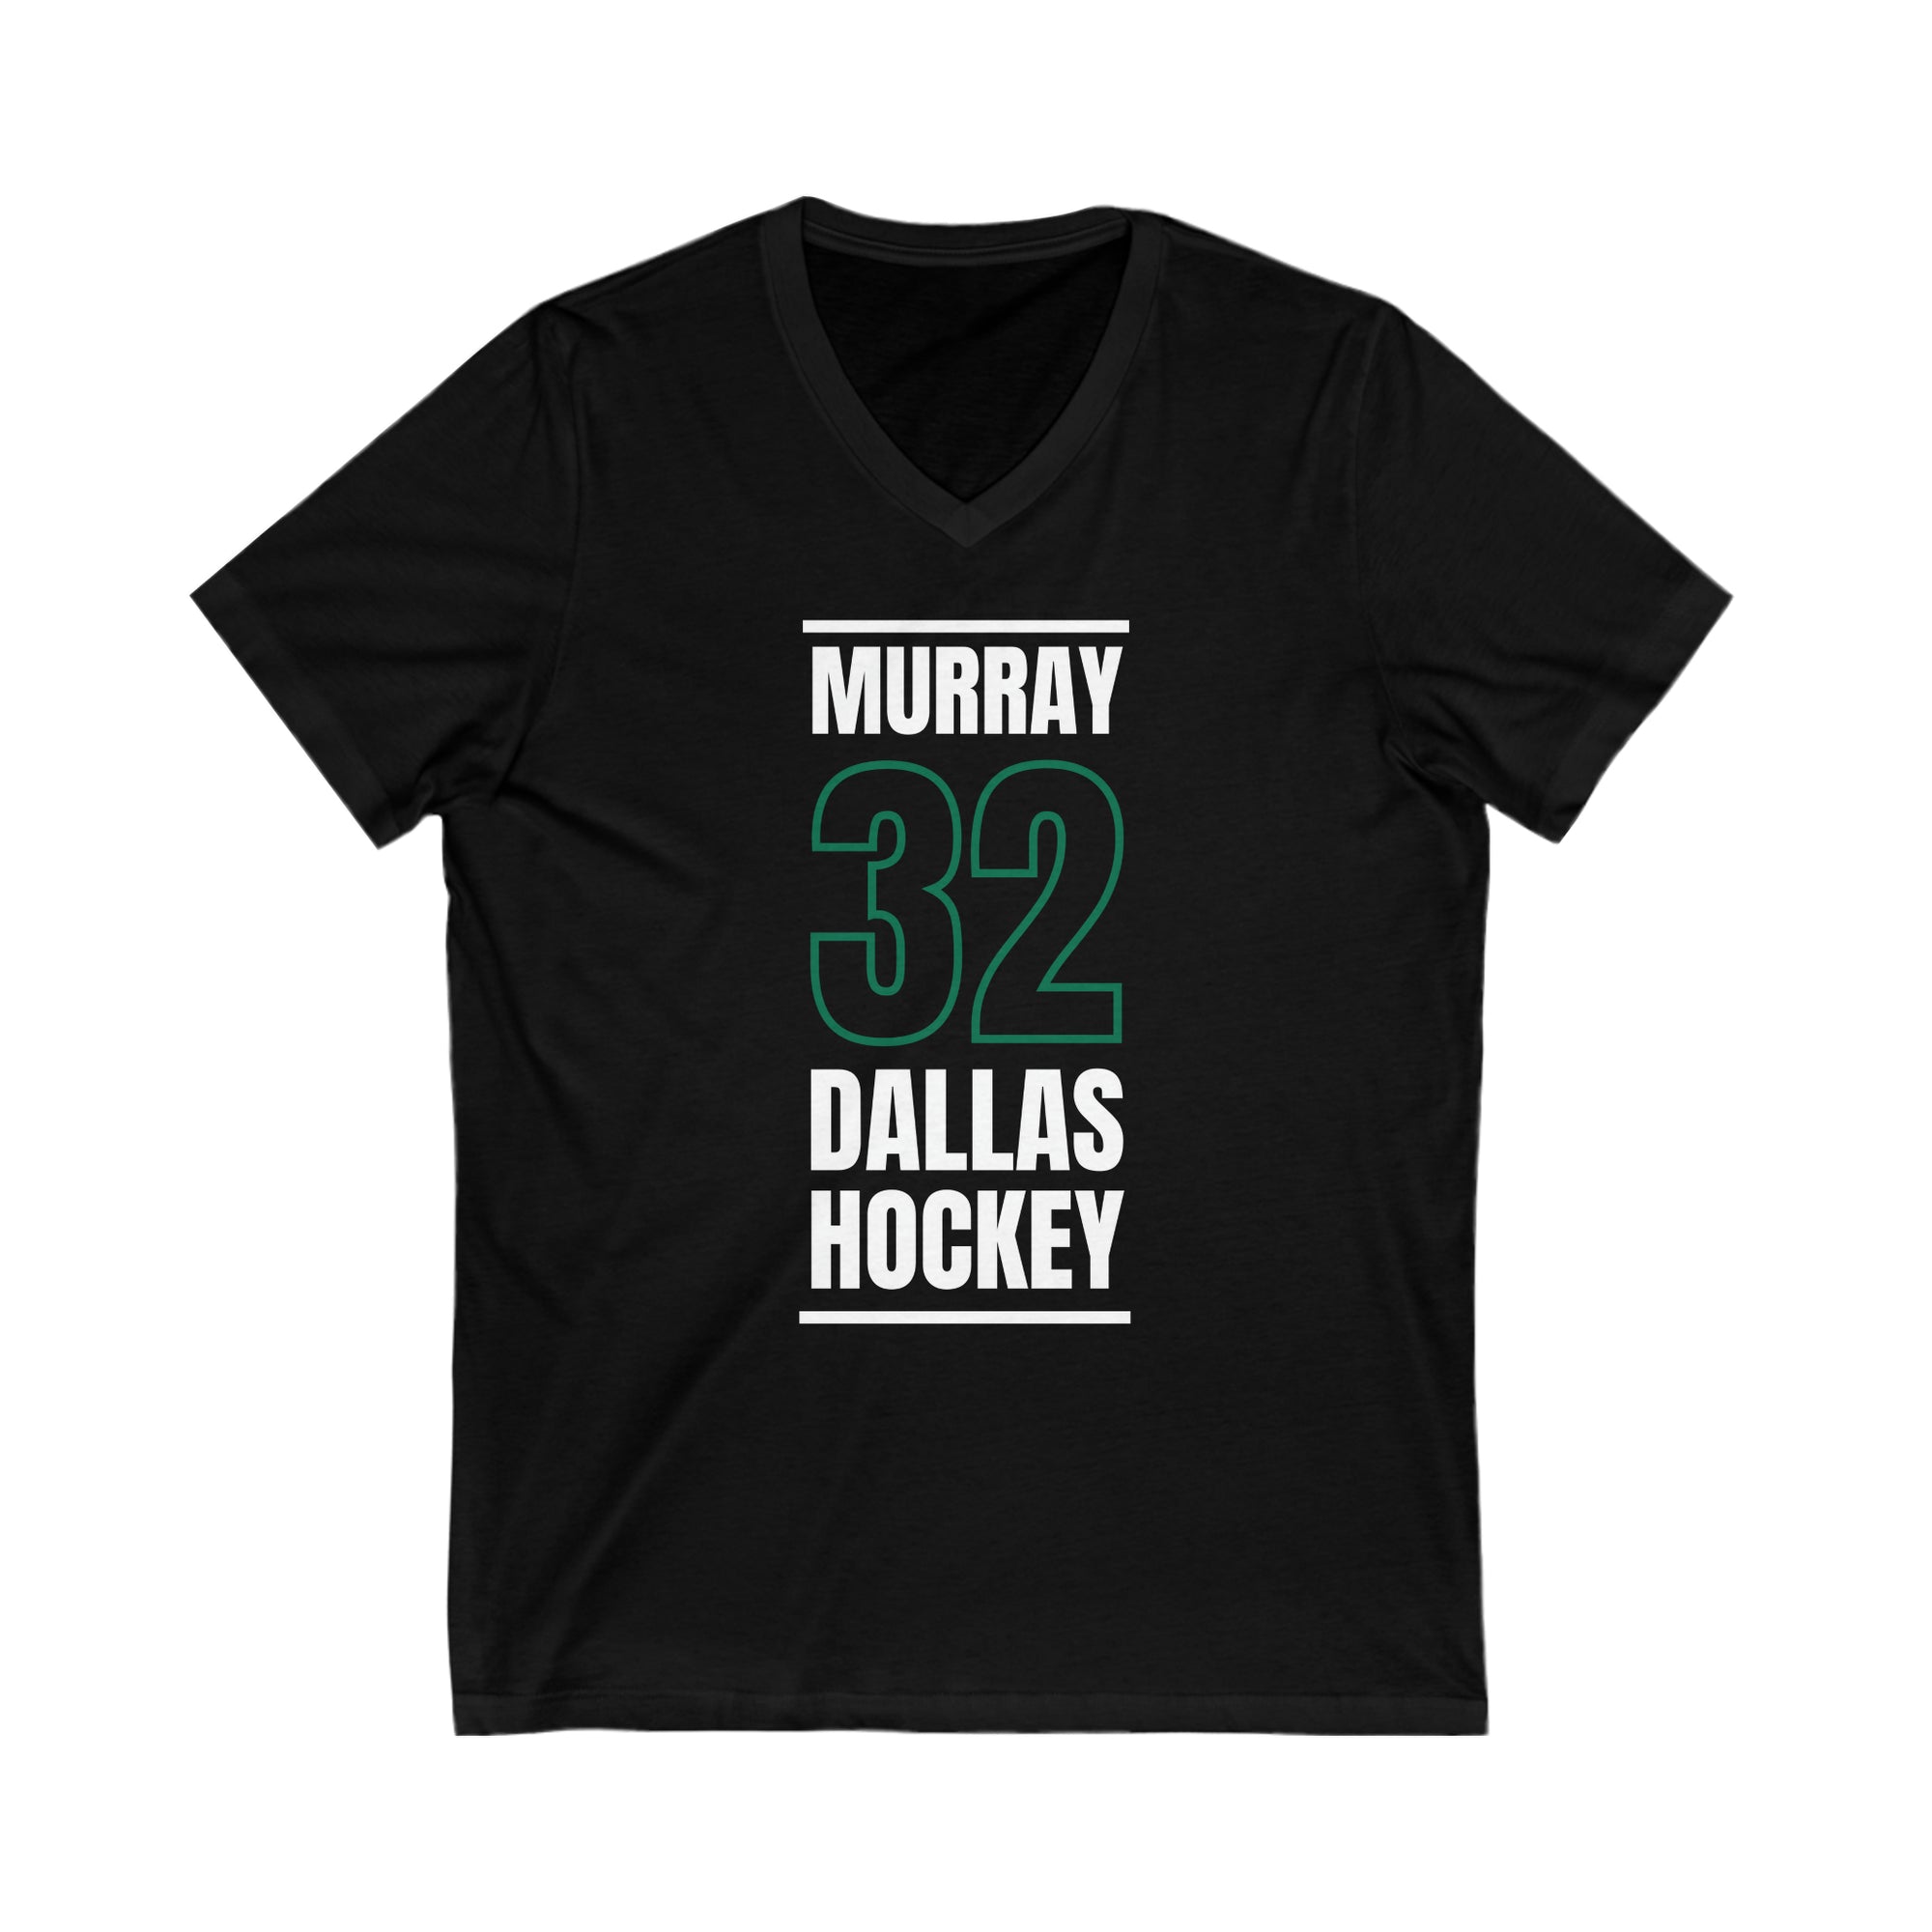 Murray 32 Dallas Hockey Black Vertical Design Unisex V-Neck Tee